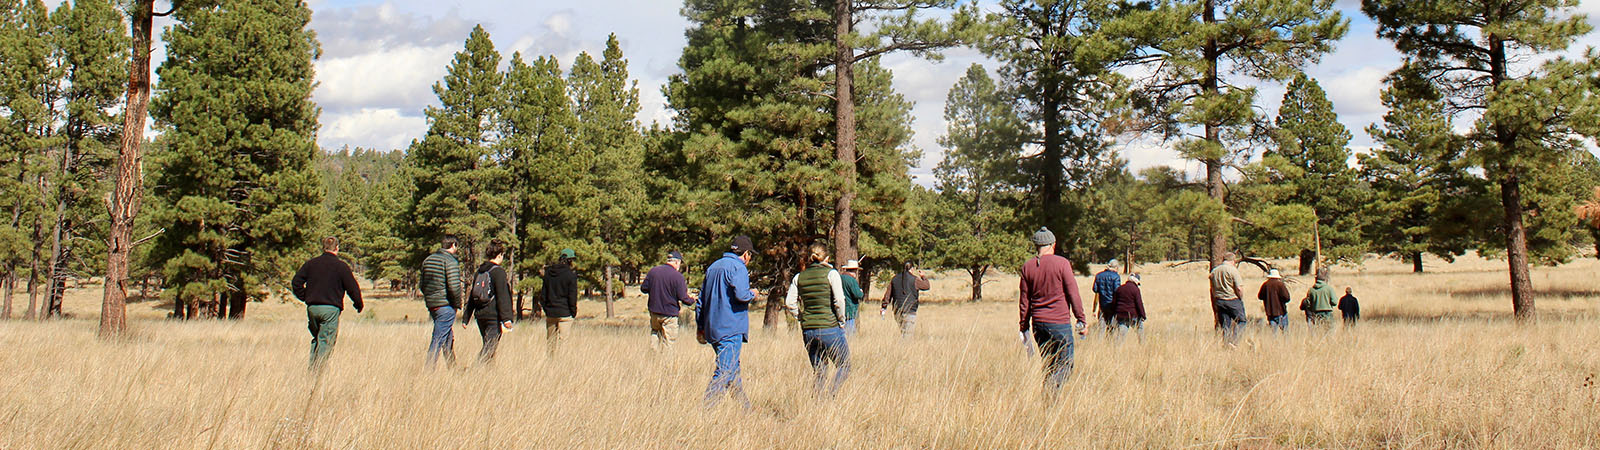 Team walking through wooded field